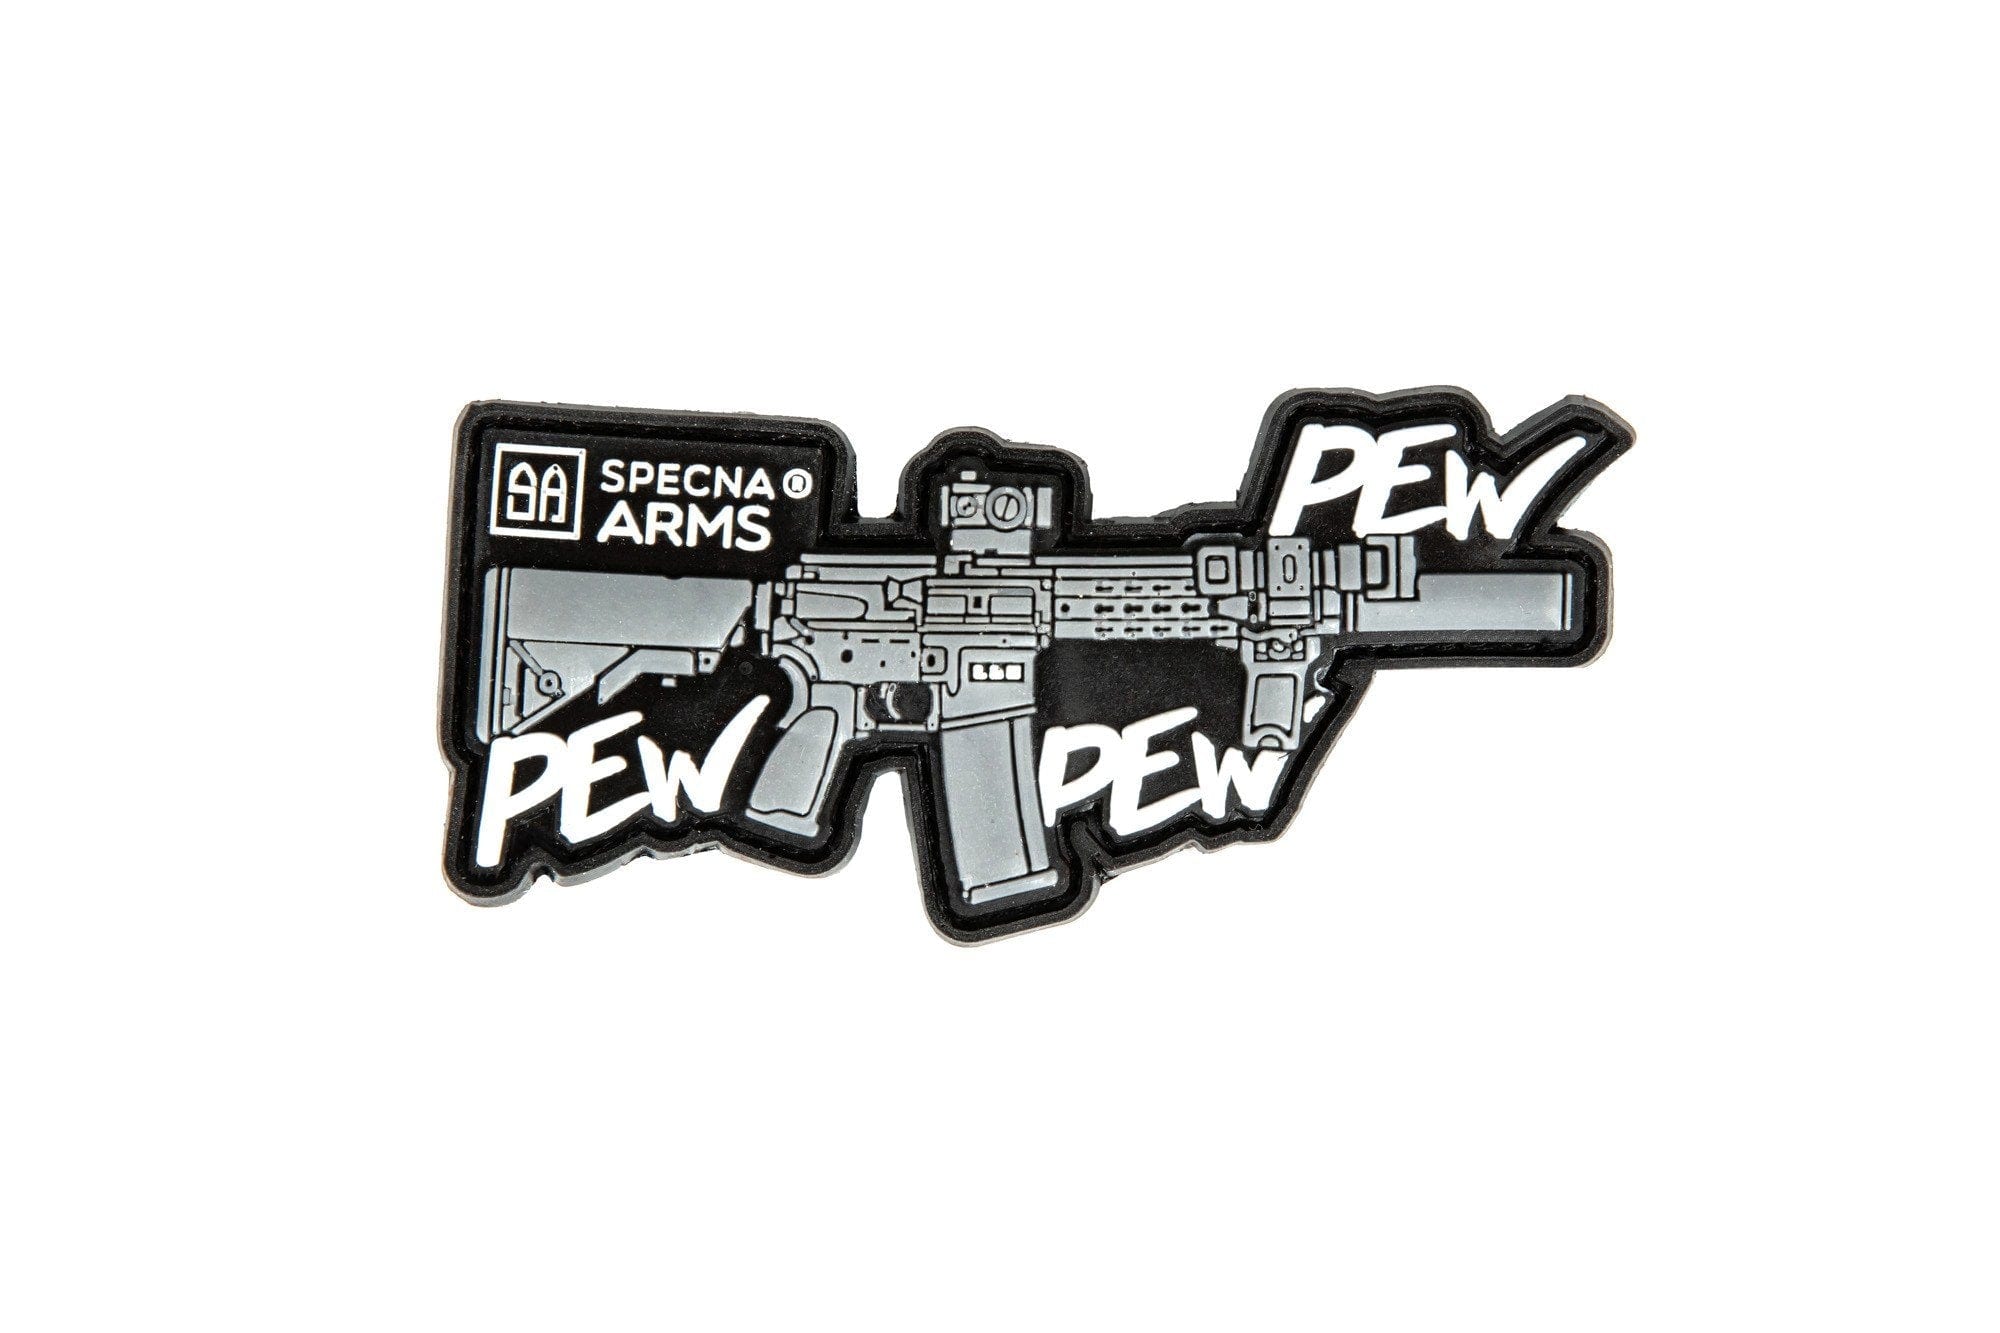 "PEW PEW PEW" 2 Specna Arms patch